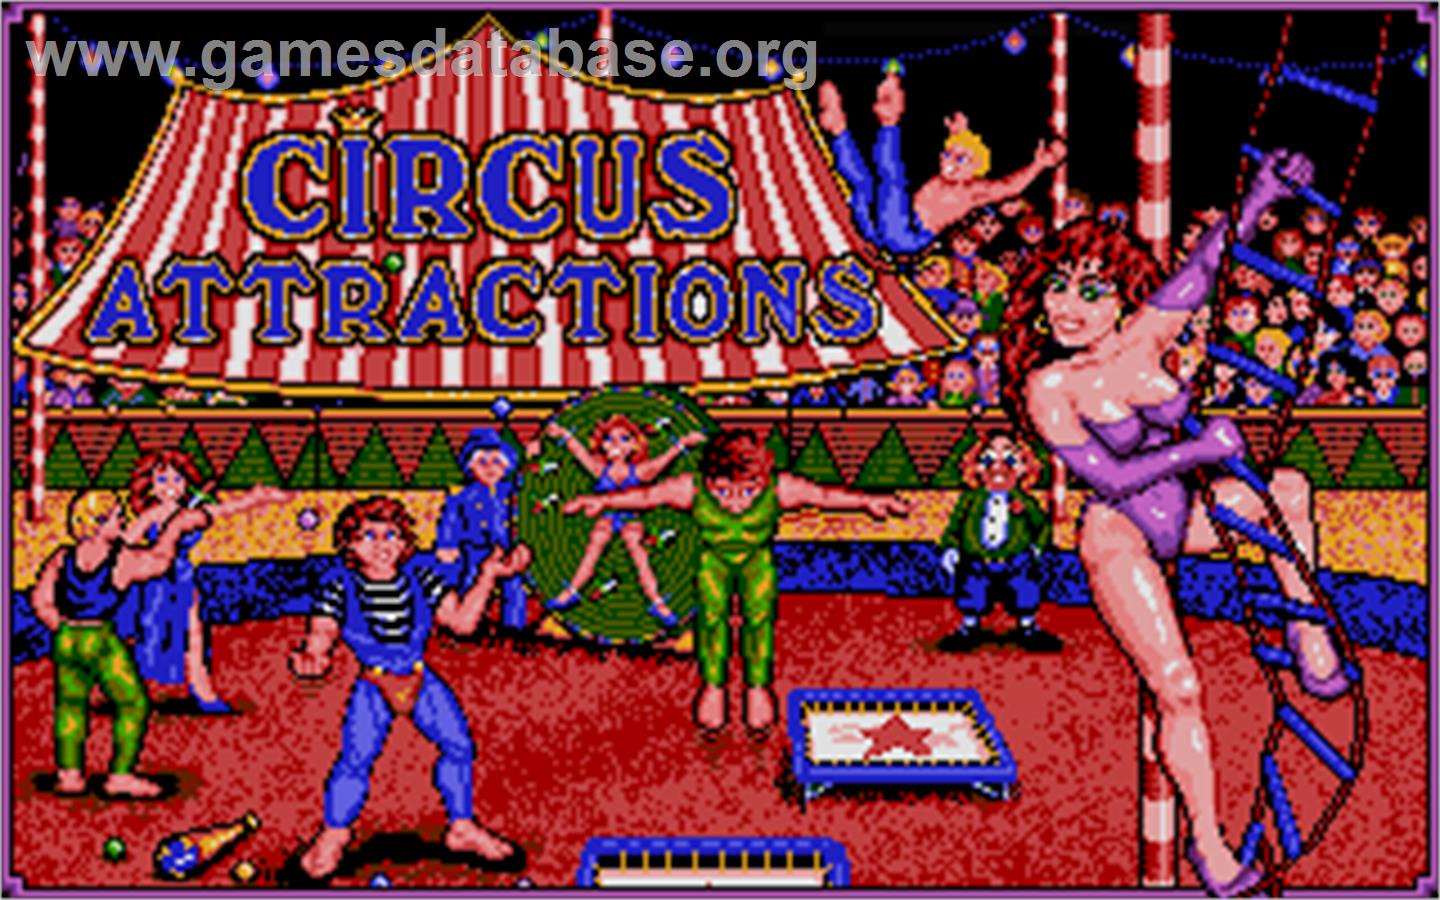 Circus Attractions - Atari ST - Artwork - Title Screen